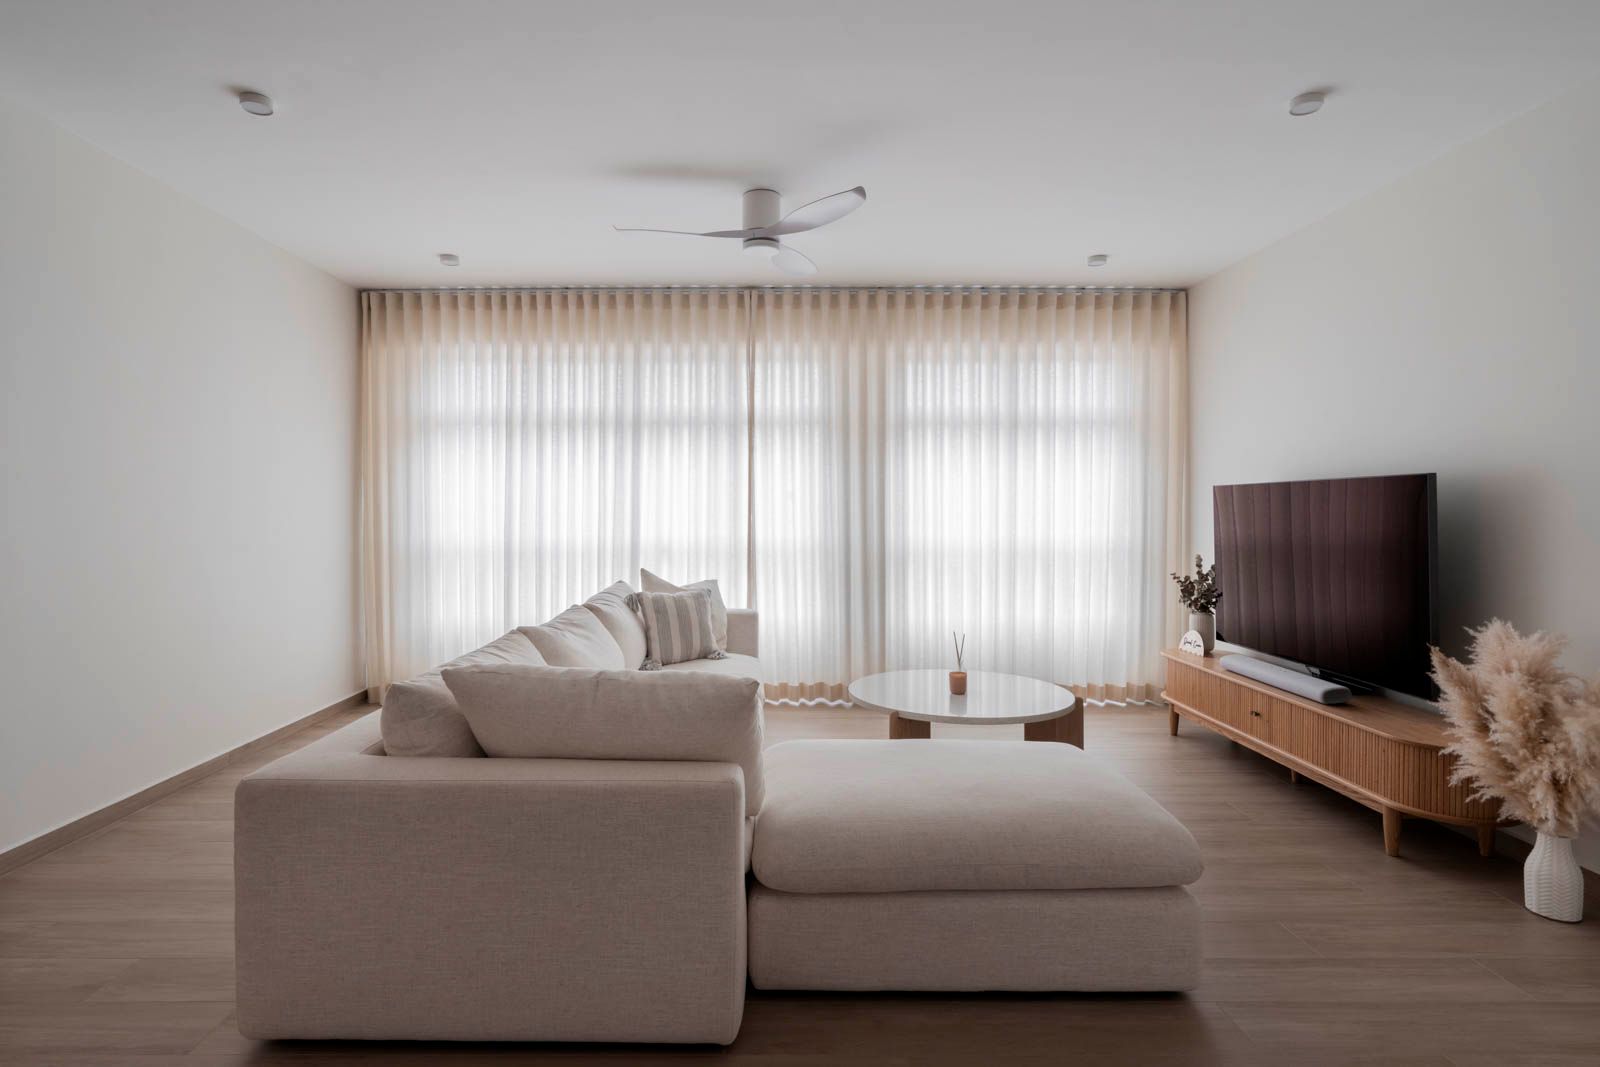 Scandinavian living room designed by Lemonfridge Studio featuring a white sofa, wooden coffee table, and abundant natural light through large windows.